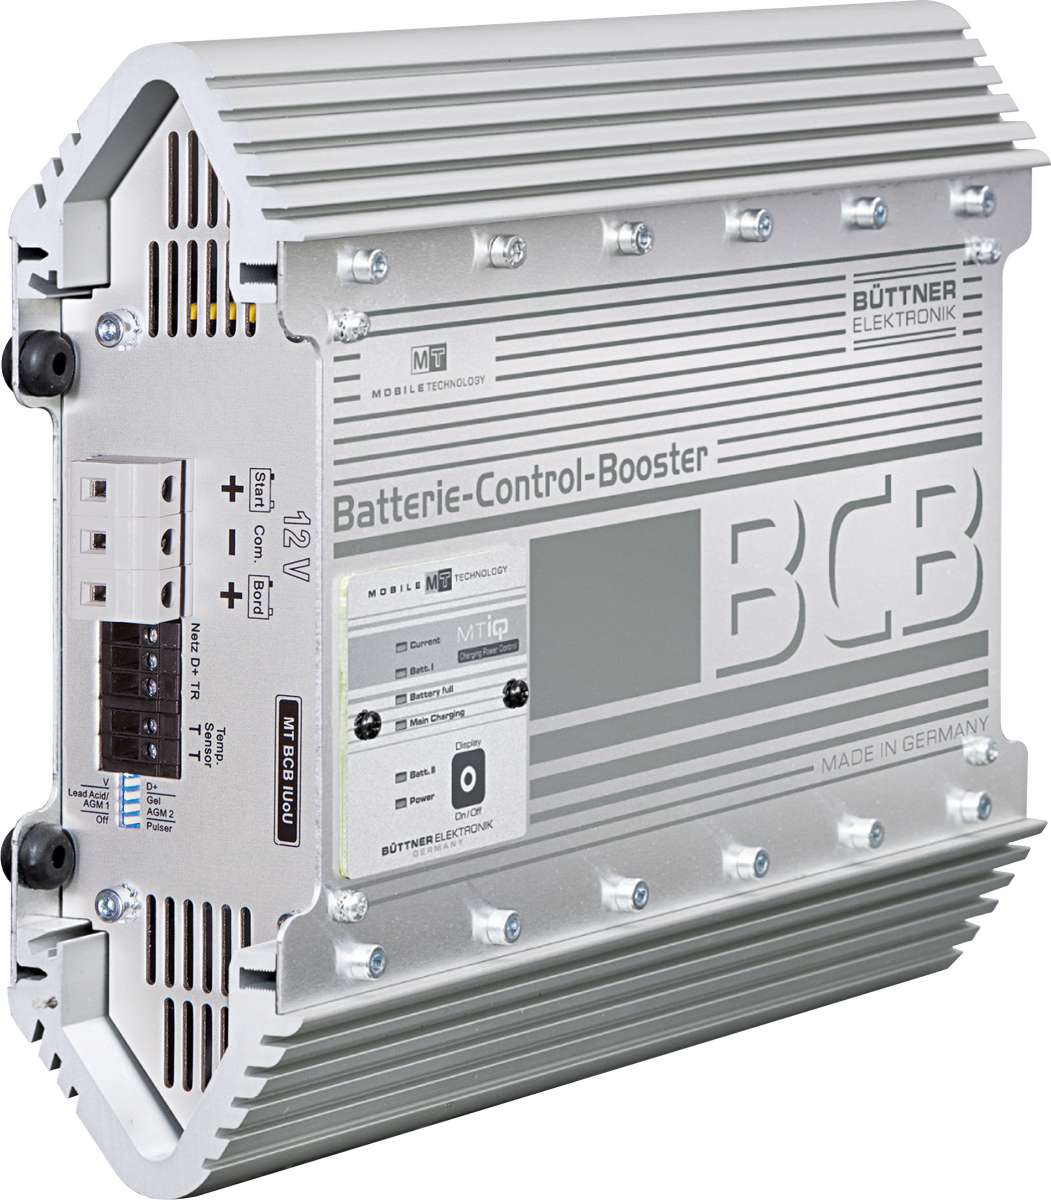 Büttner Batterie-Control-Booster MT BCB 10-10 IUoU 12 V / 10 A, 230 V / 8 A